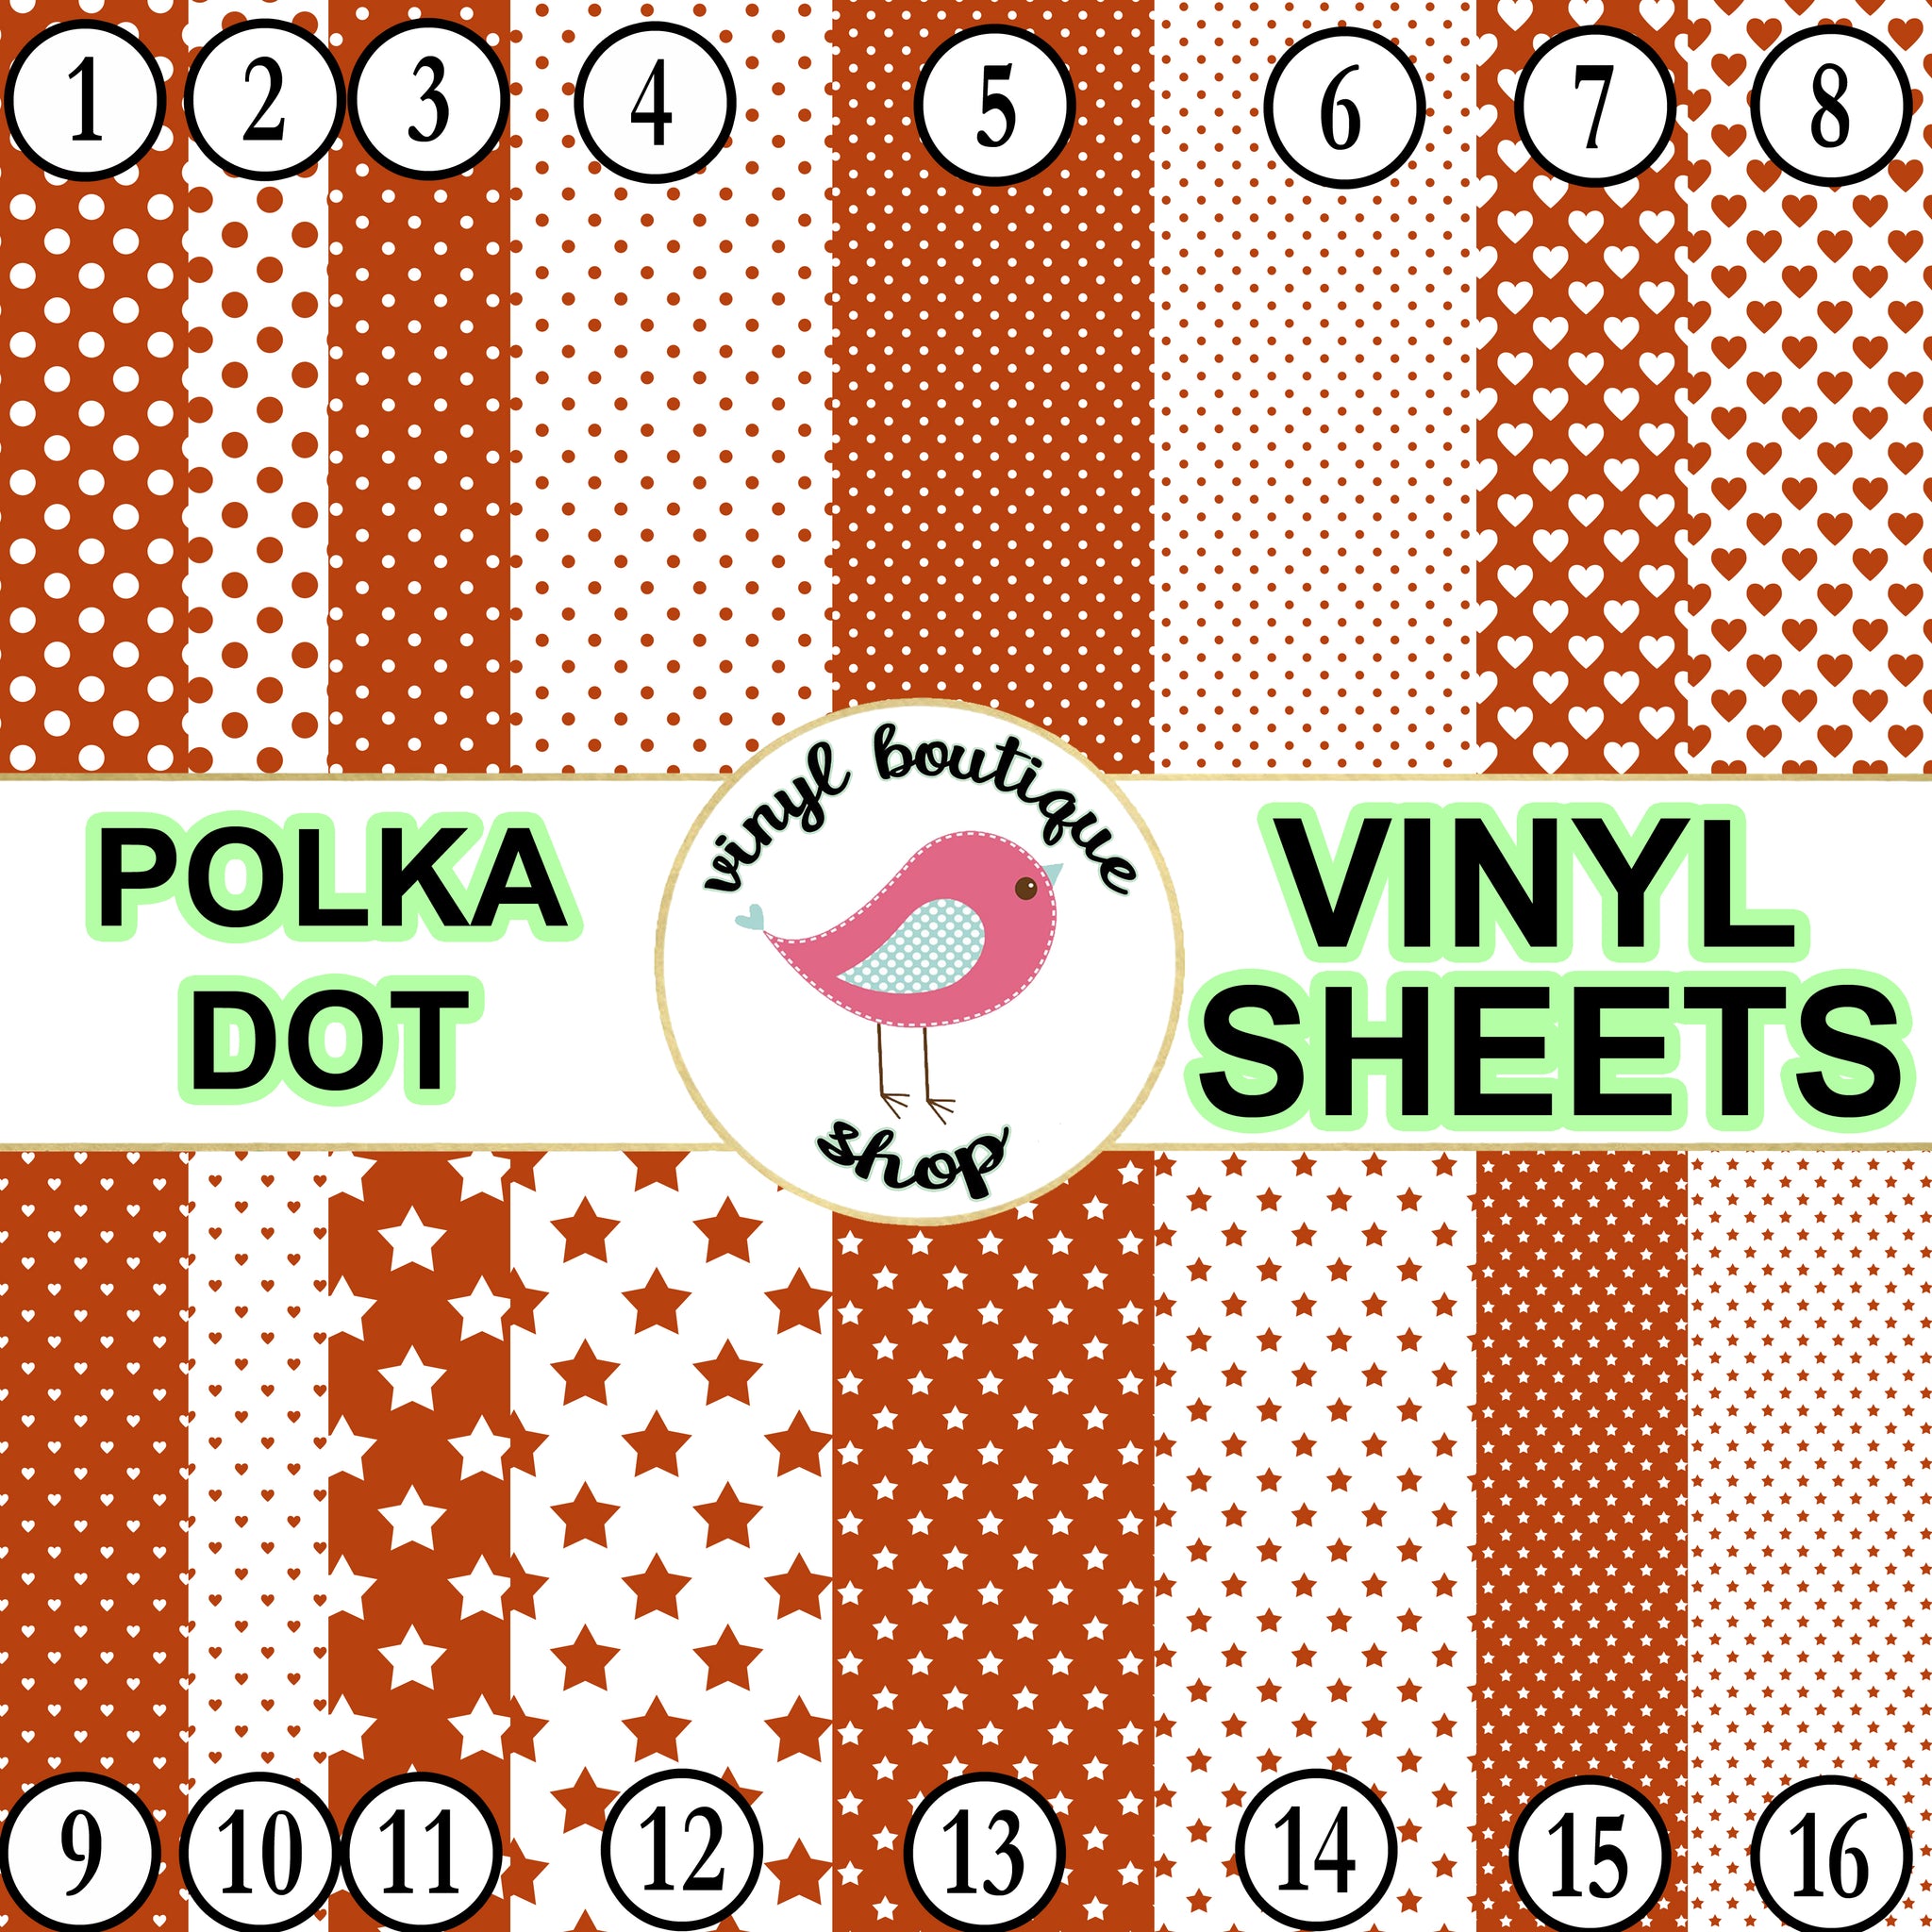 Polka Dot Rustic Orange Adhesive Heat Transfer Vinyl Sheet - Vinyl Boutique Shop